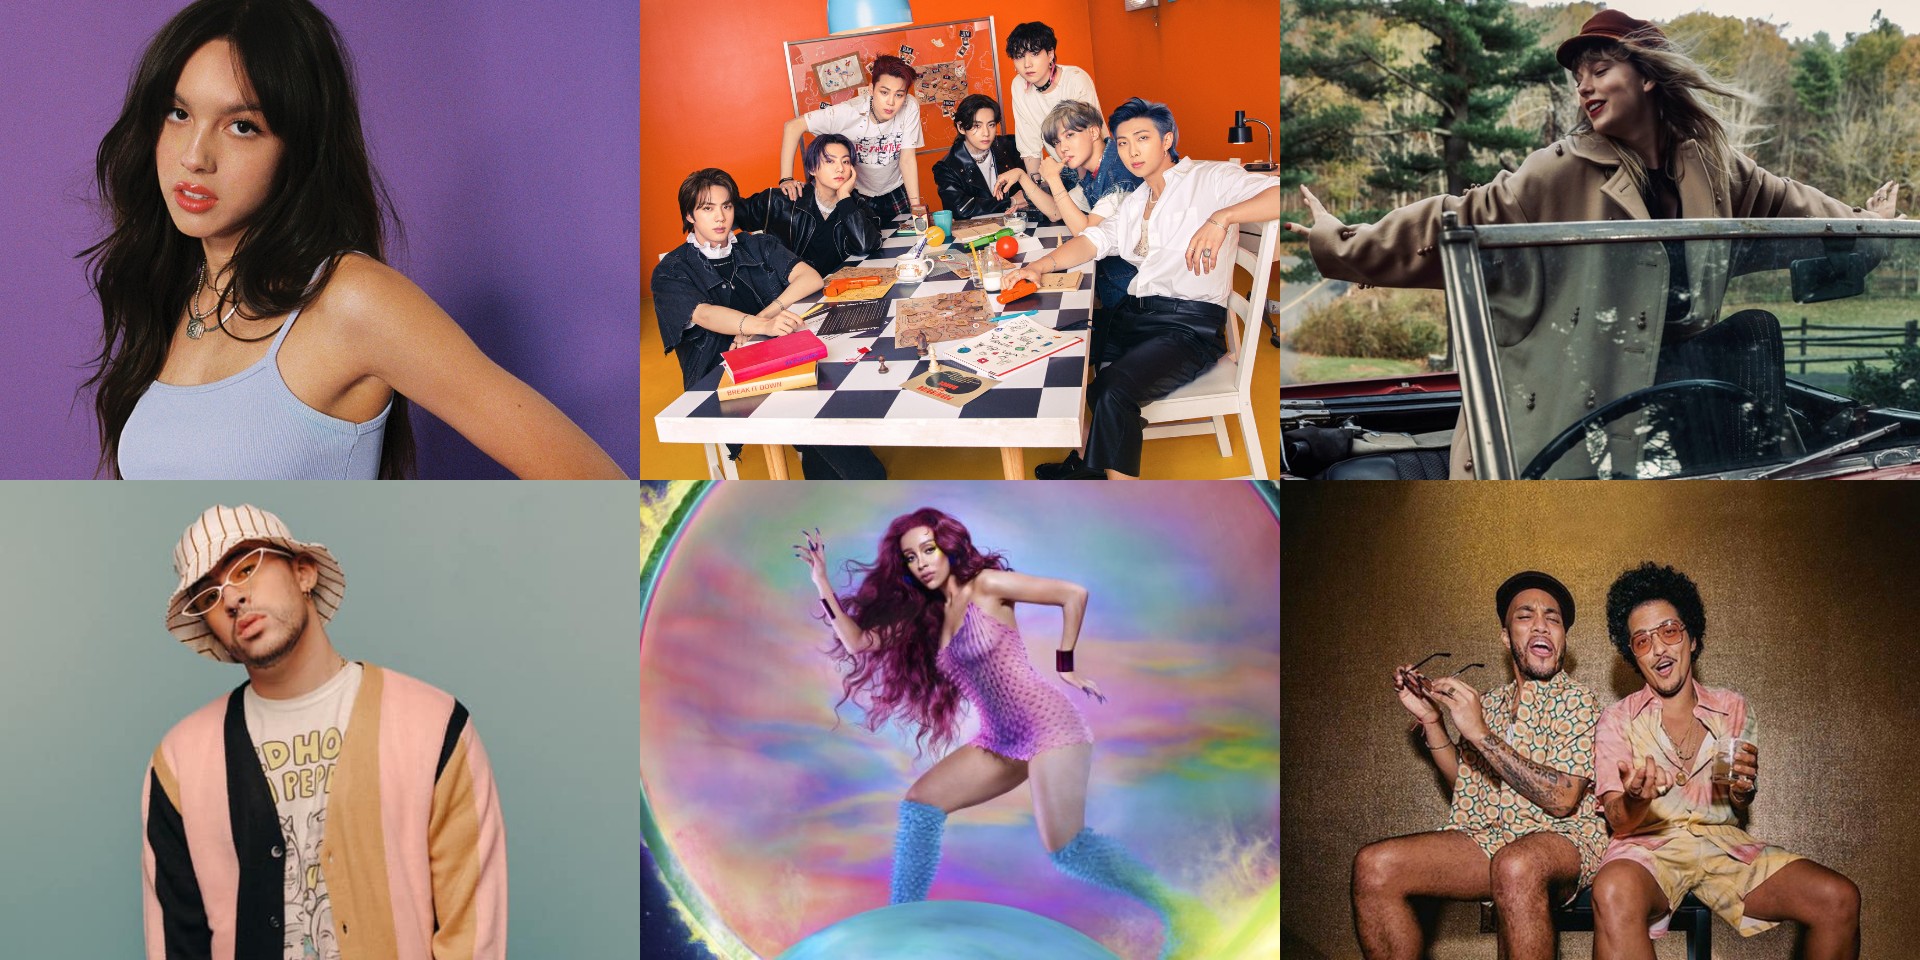 Here are the winners of the 2021 American Music Awards – BTS, Olivia Rodrigo, Silk Sonic, Taylor Swift, Bad Bunny, Doja Cat, and more